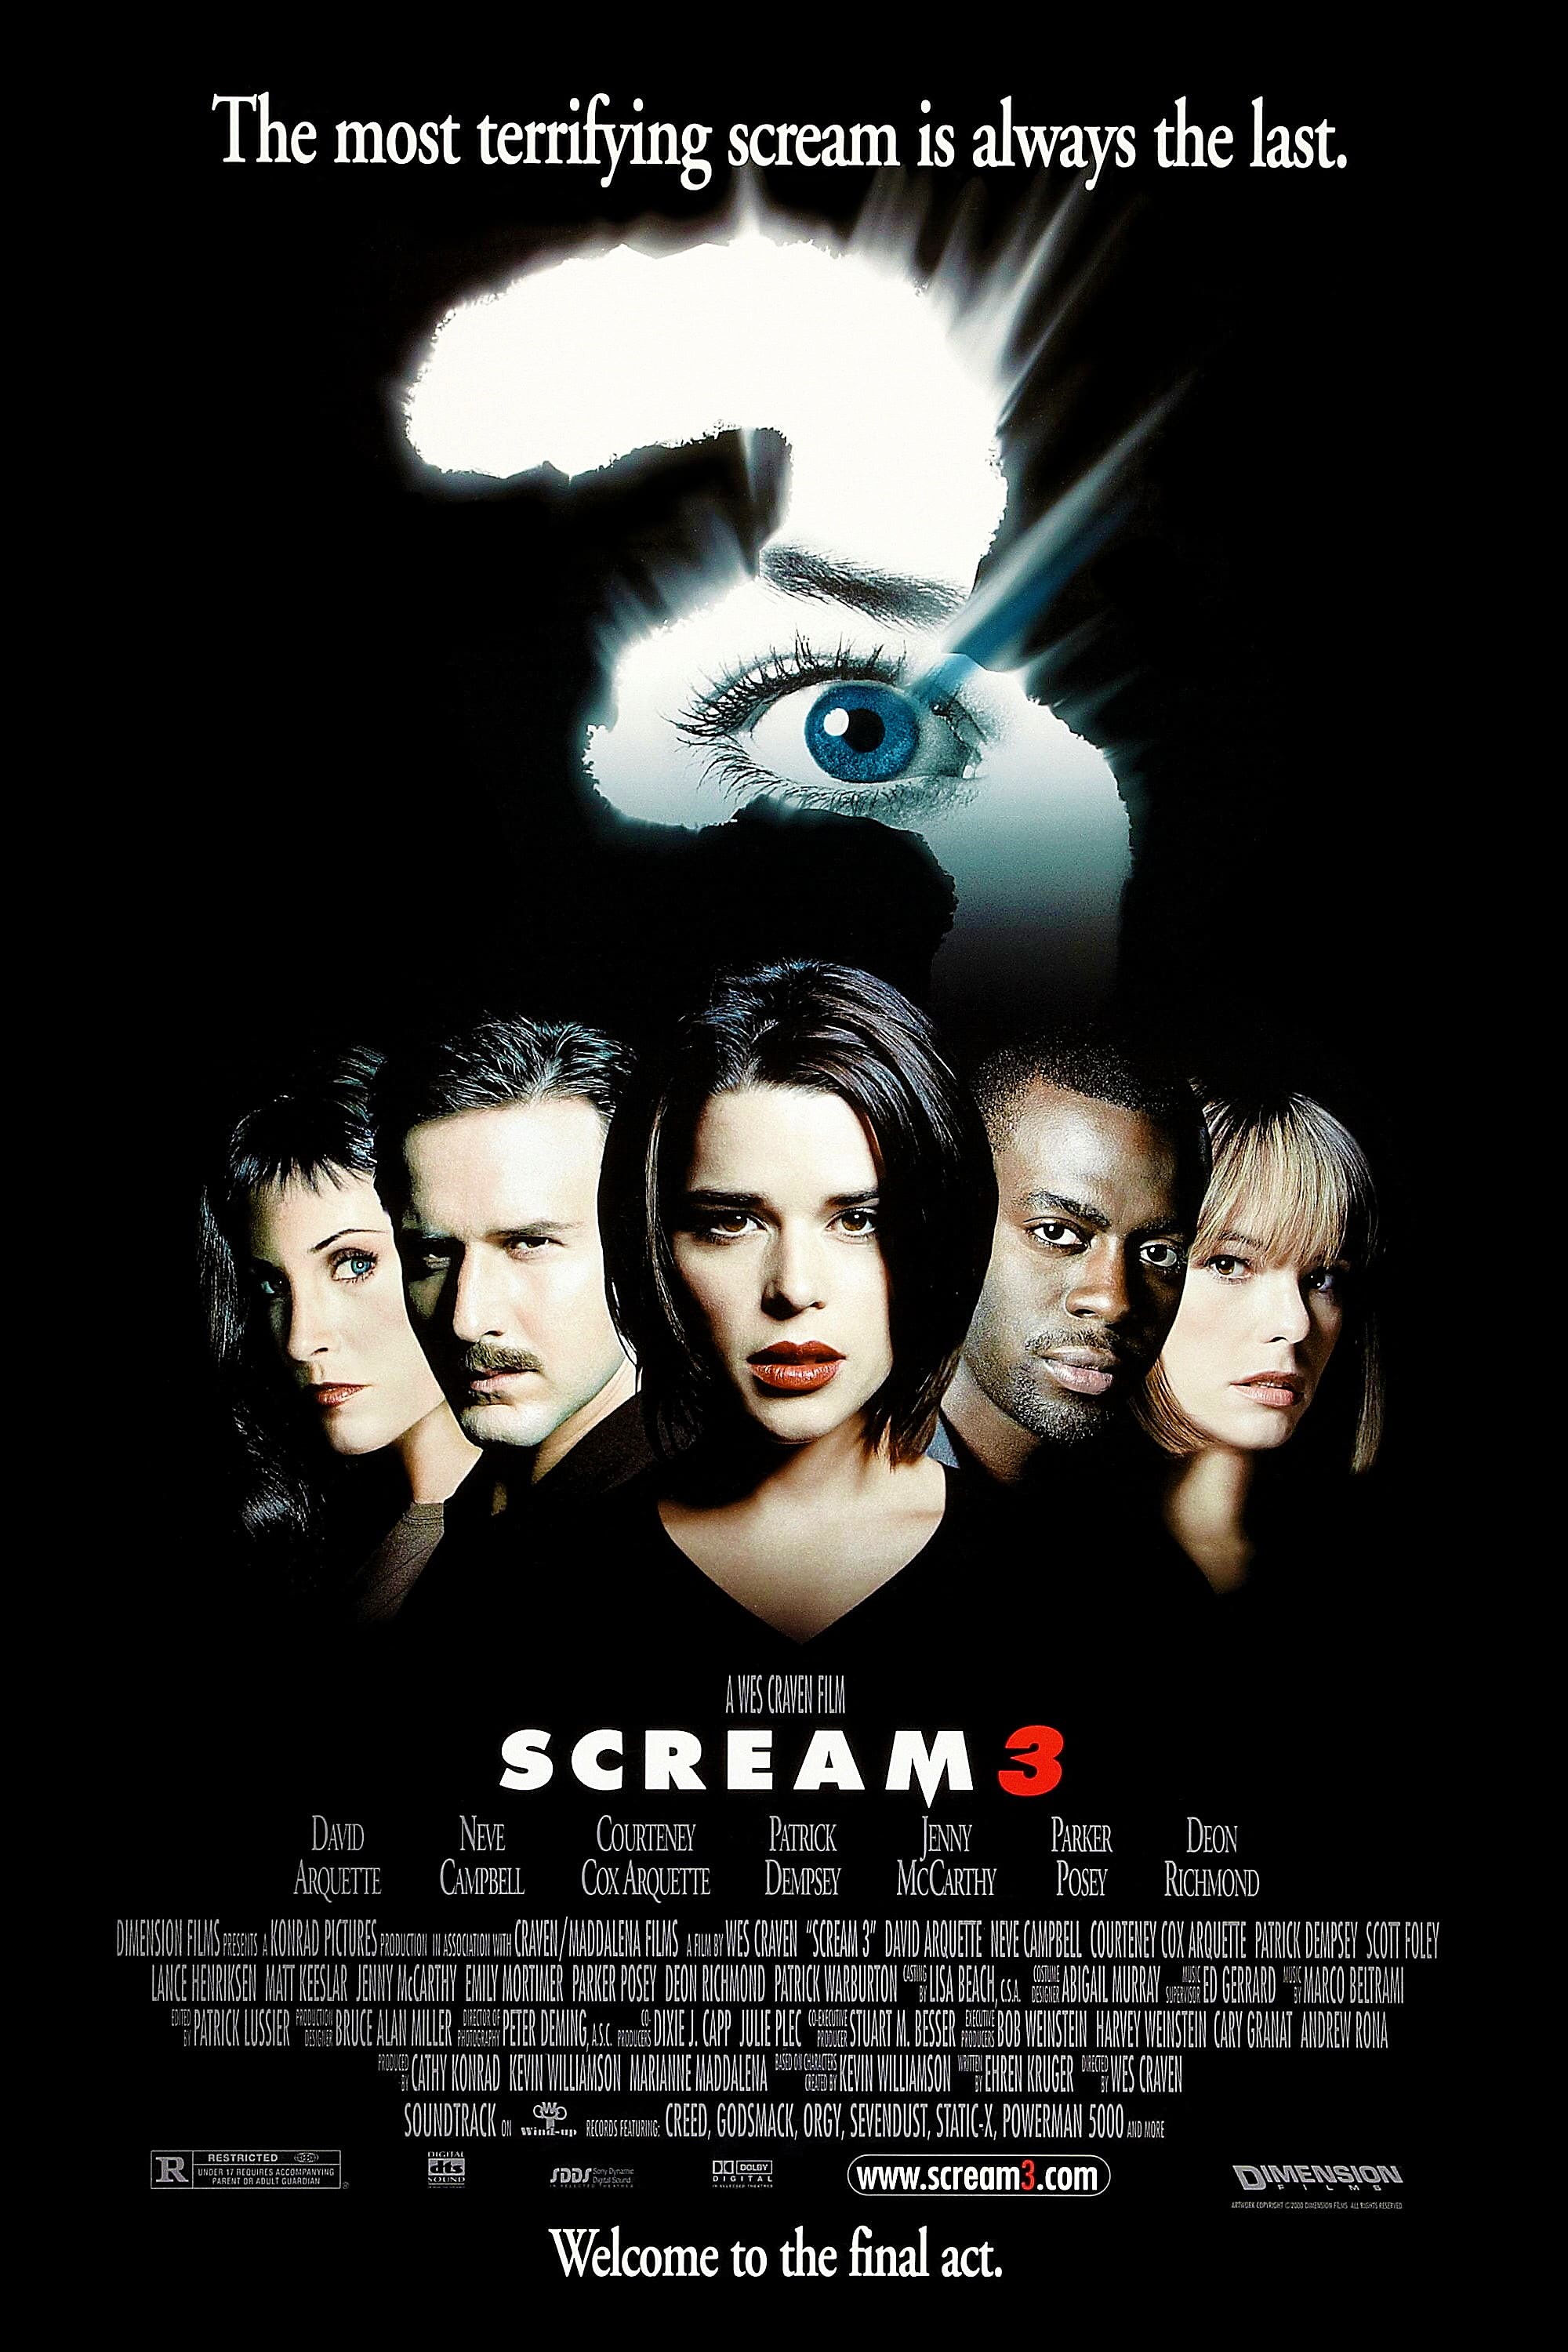 brittany renee freeman recommends Scream Full Movie Free